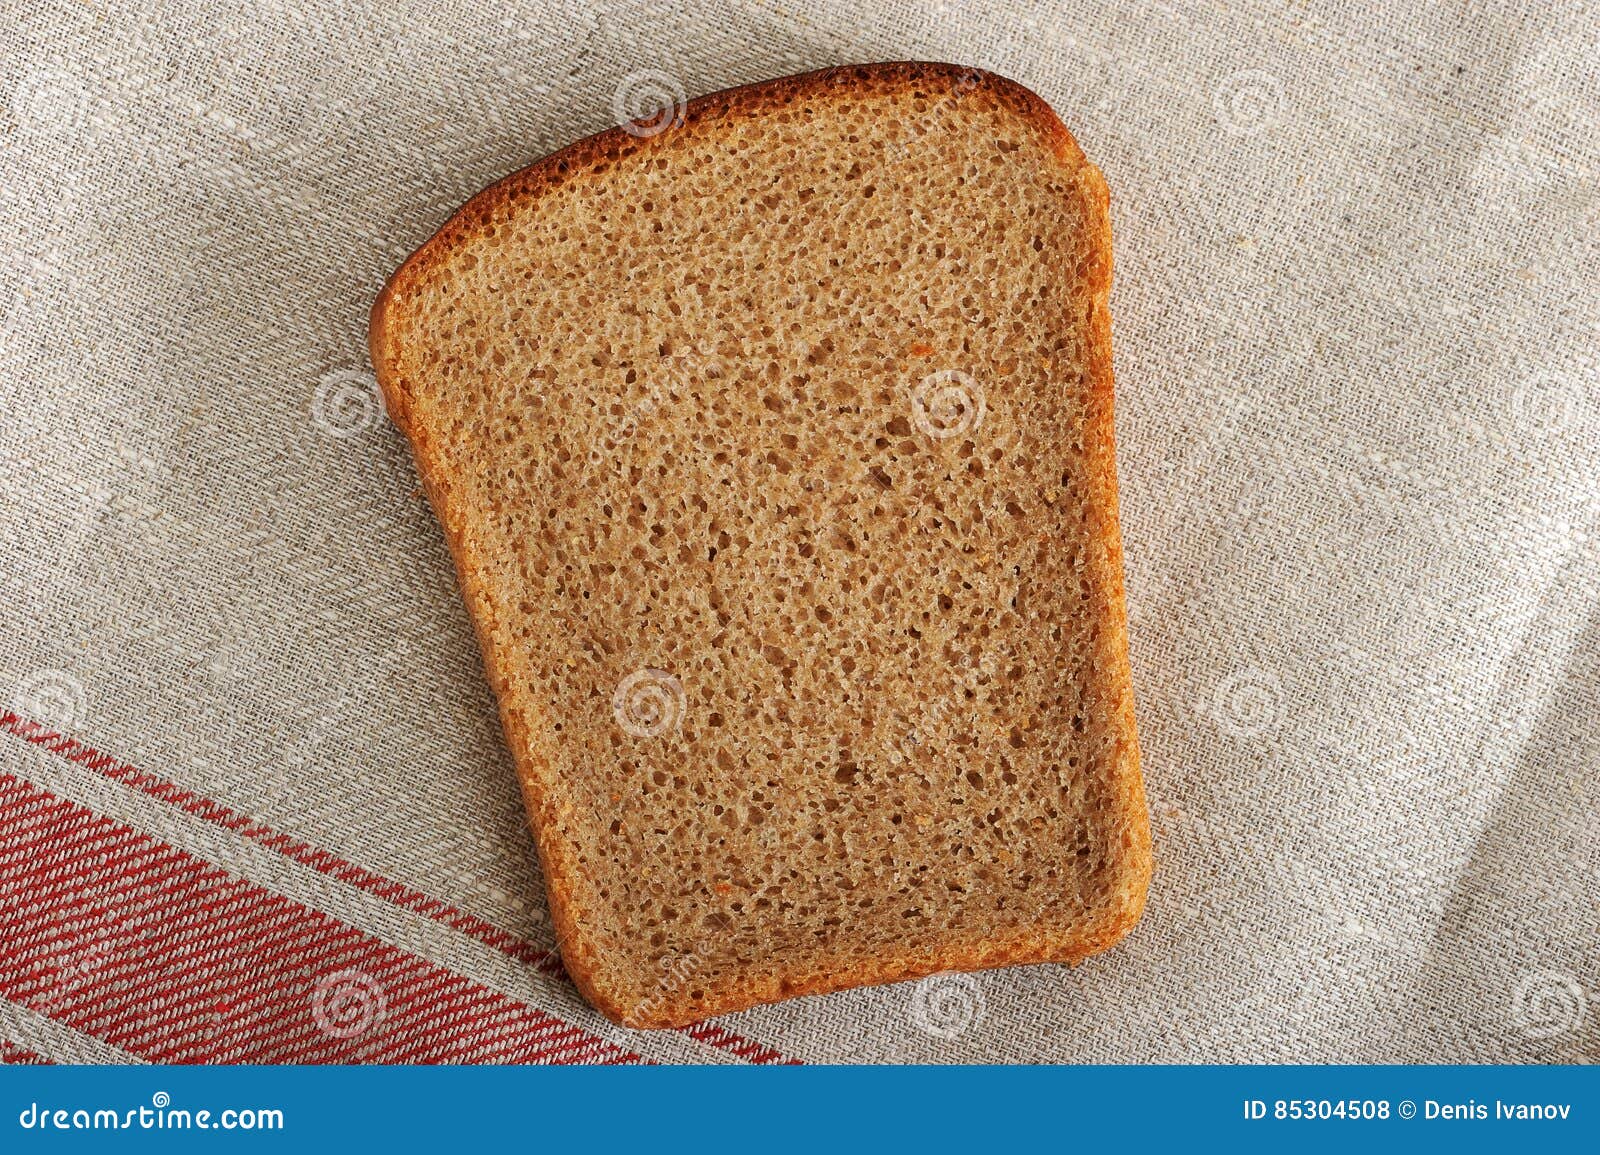 Вес ржаного хлеба